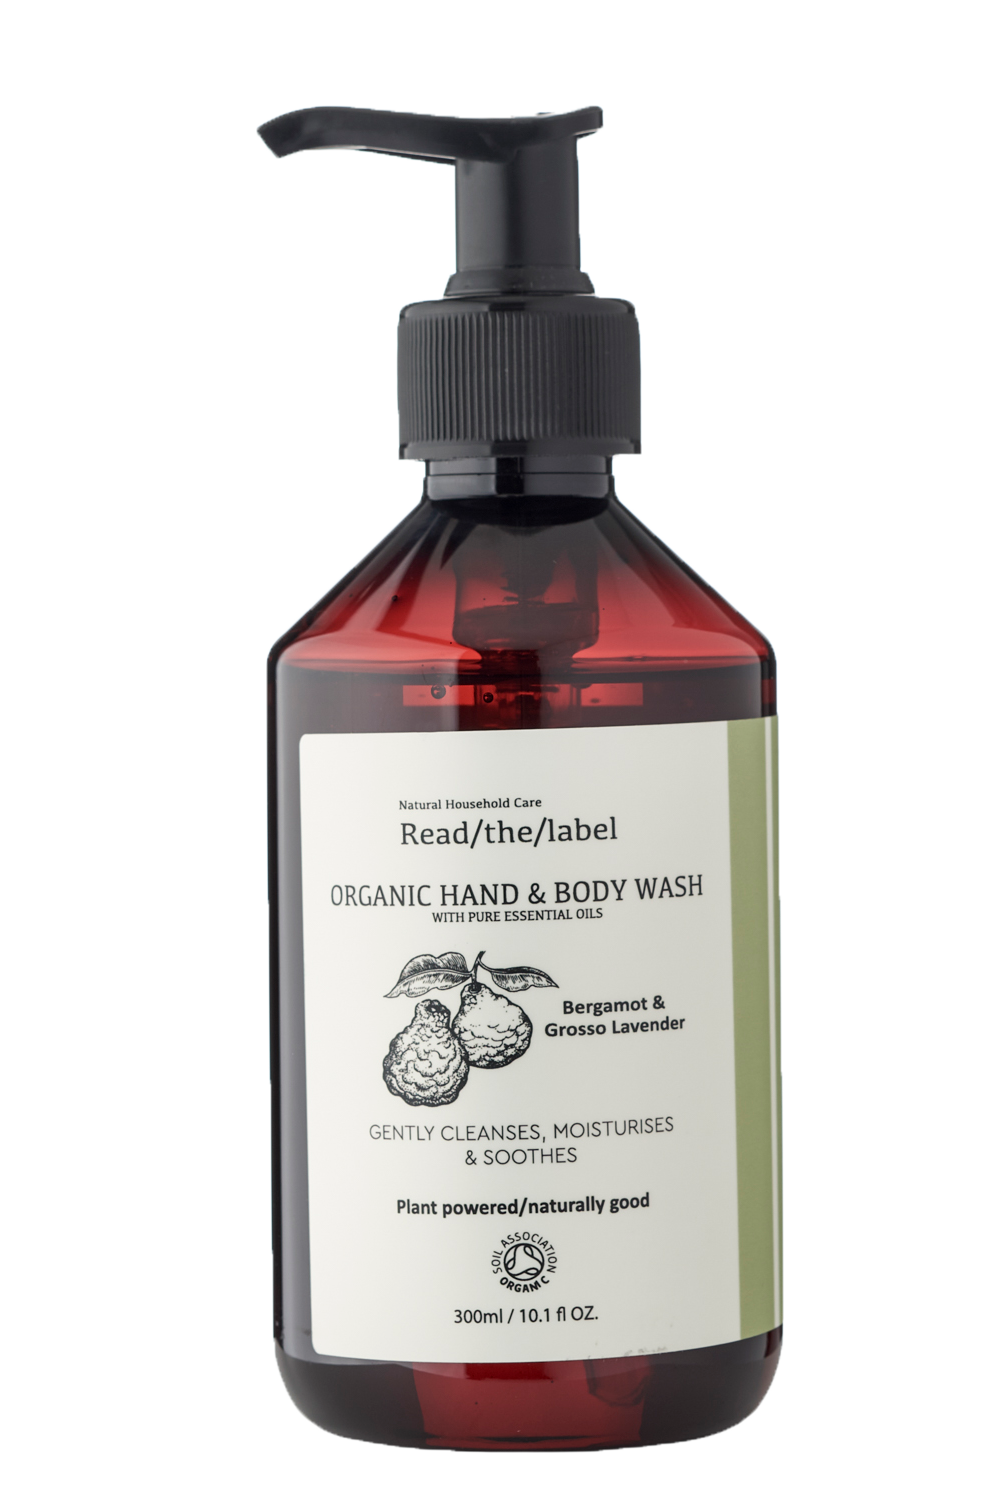 Organic hand & body wash